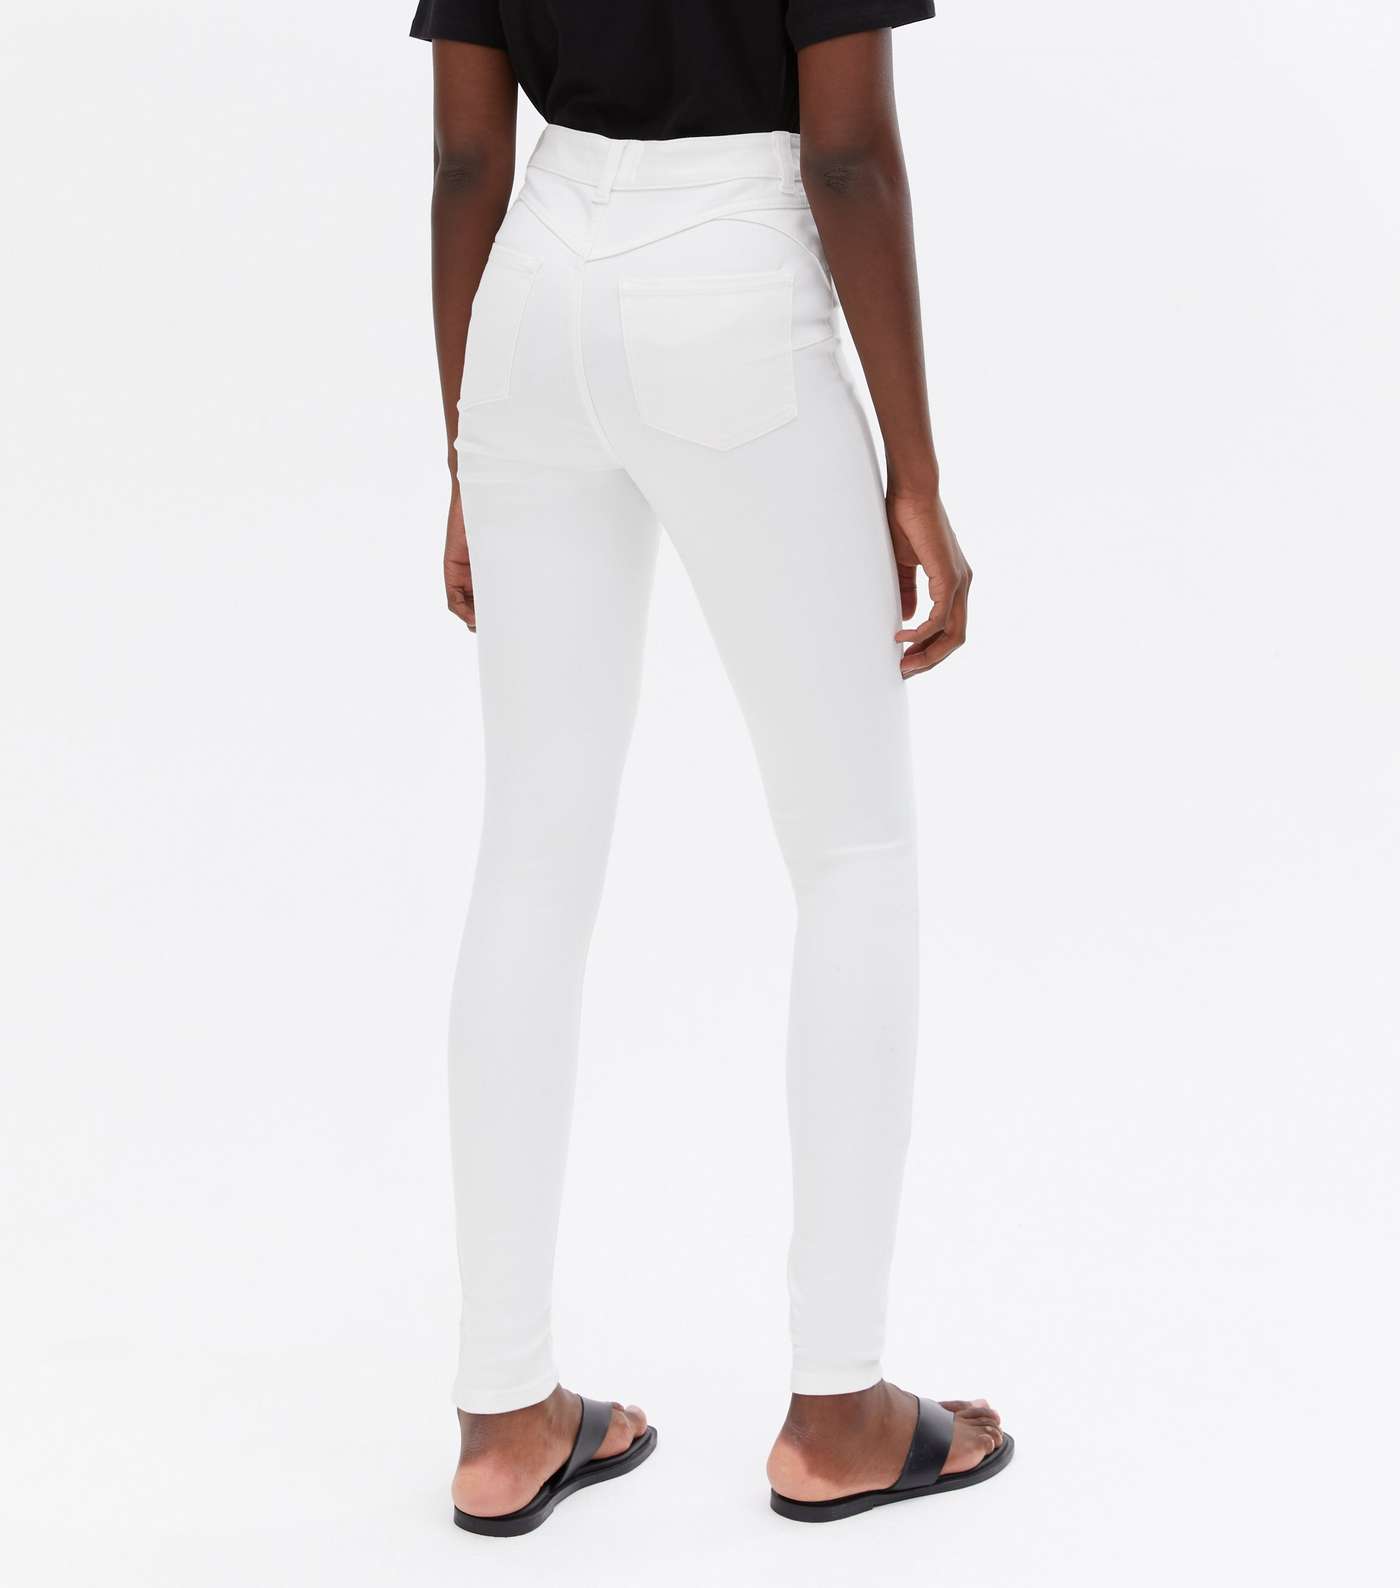 Tall White Lift & Shape Jenna Skinny Jeans Image 4